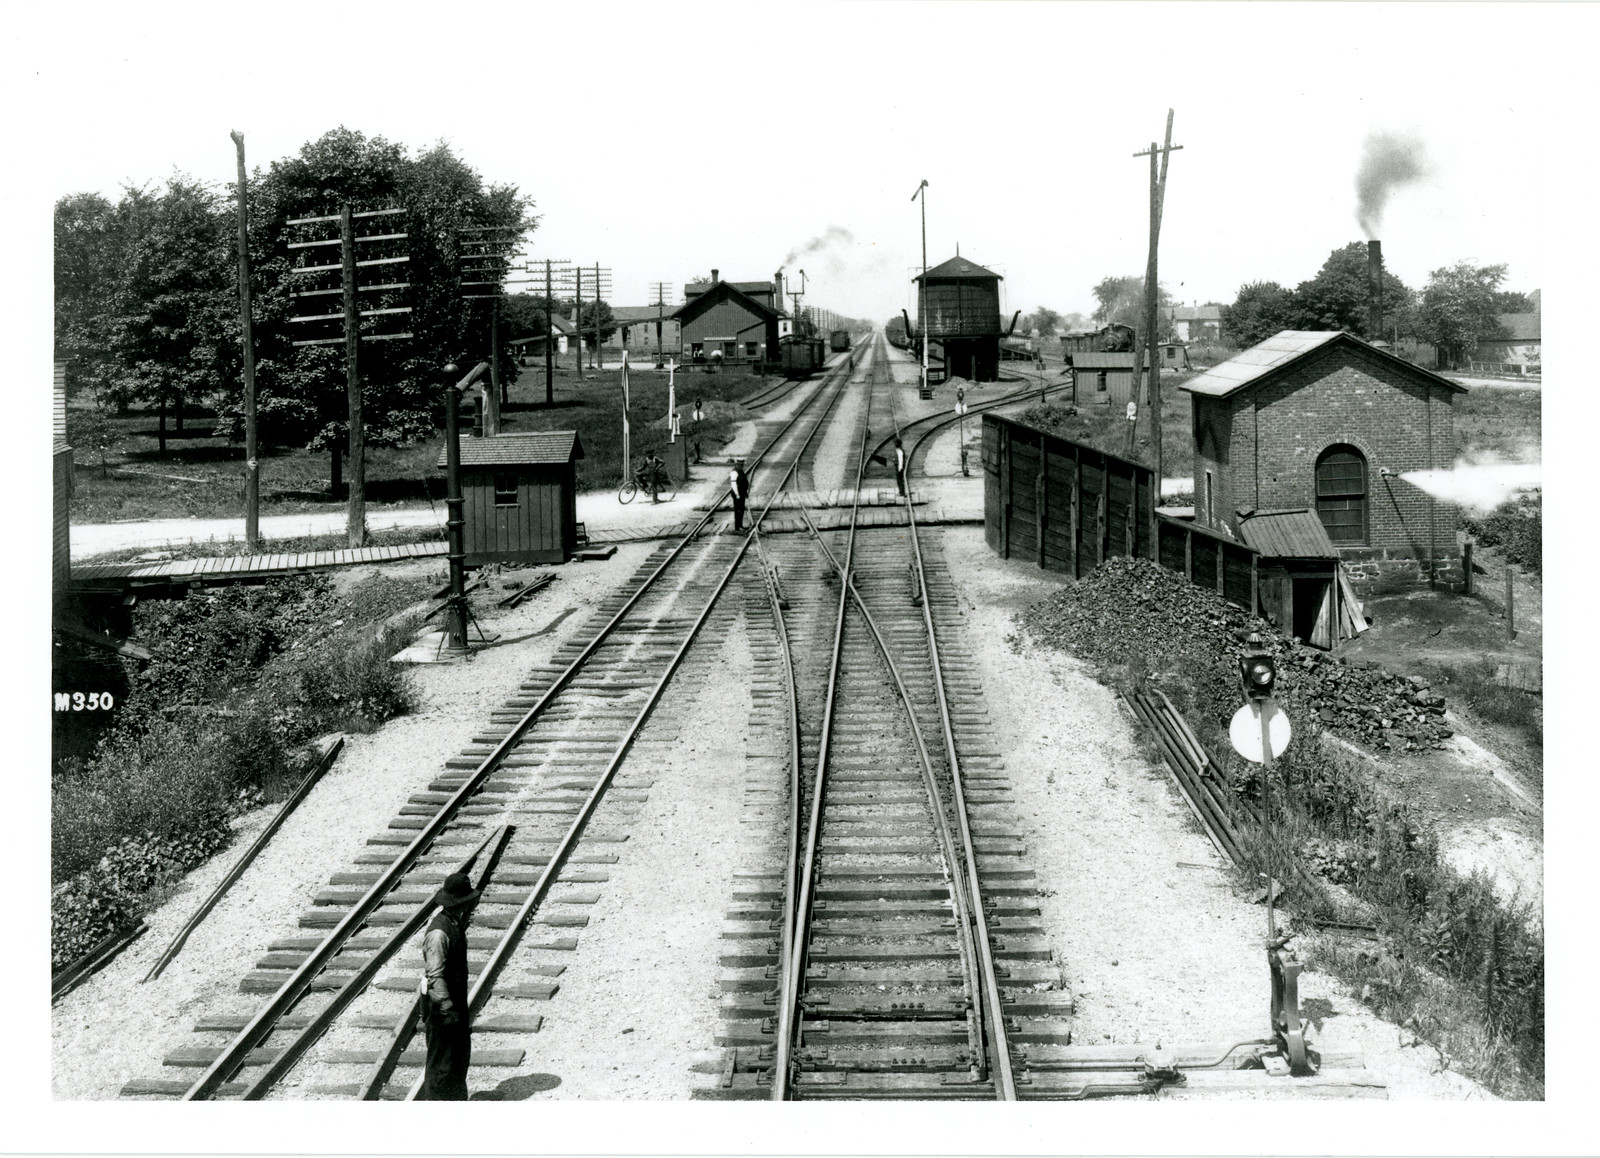 Lake Shore and Michigan Southern Railway, July 11, 1906 - Chesterton, Indiana